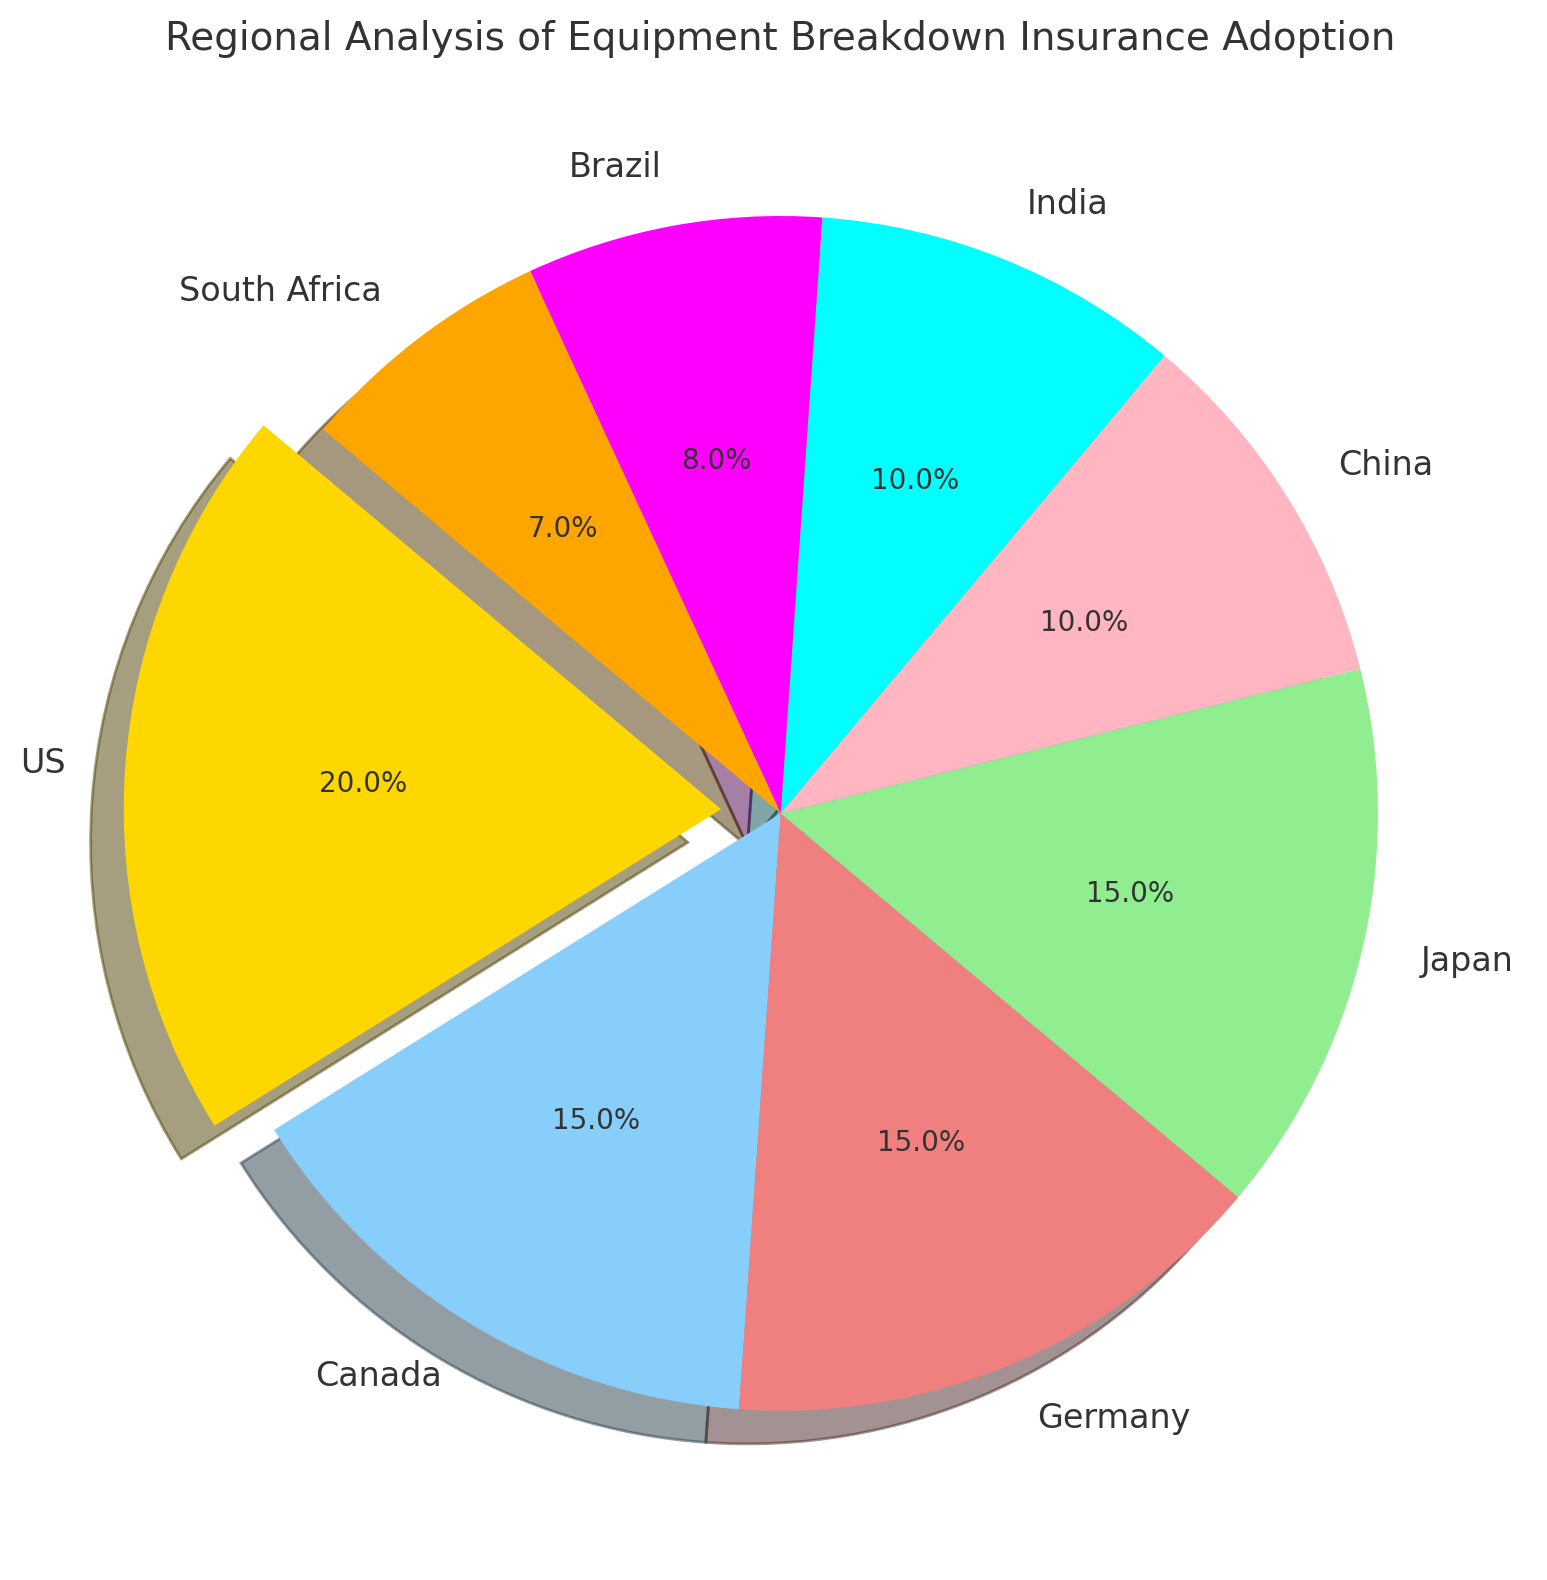 Pie Chart For the Regional Analysis of Equipment Breakdown Insurance Adoption